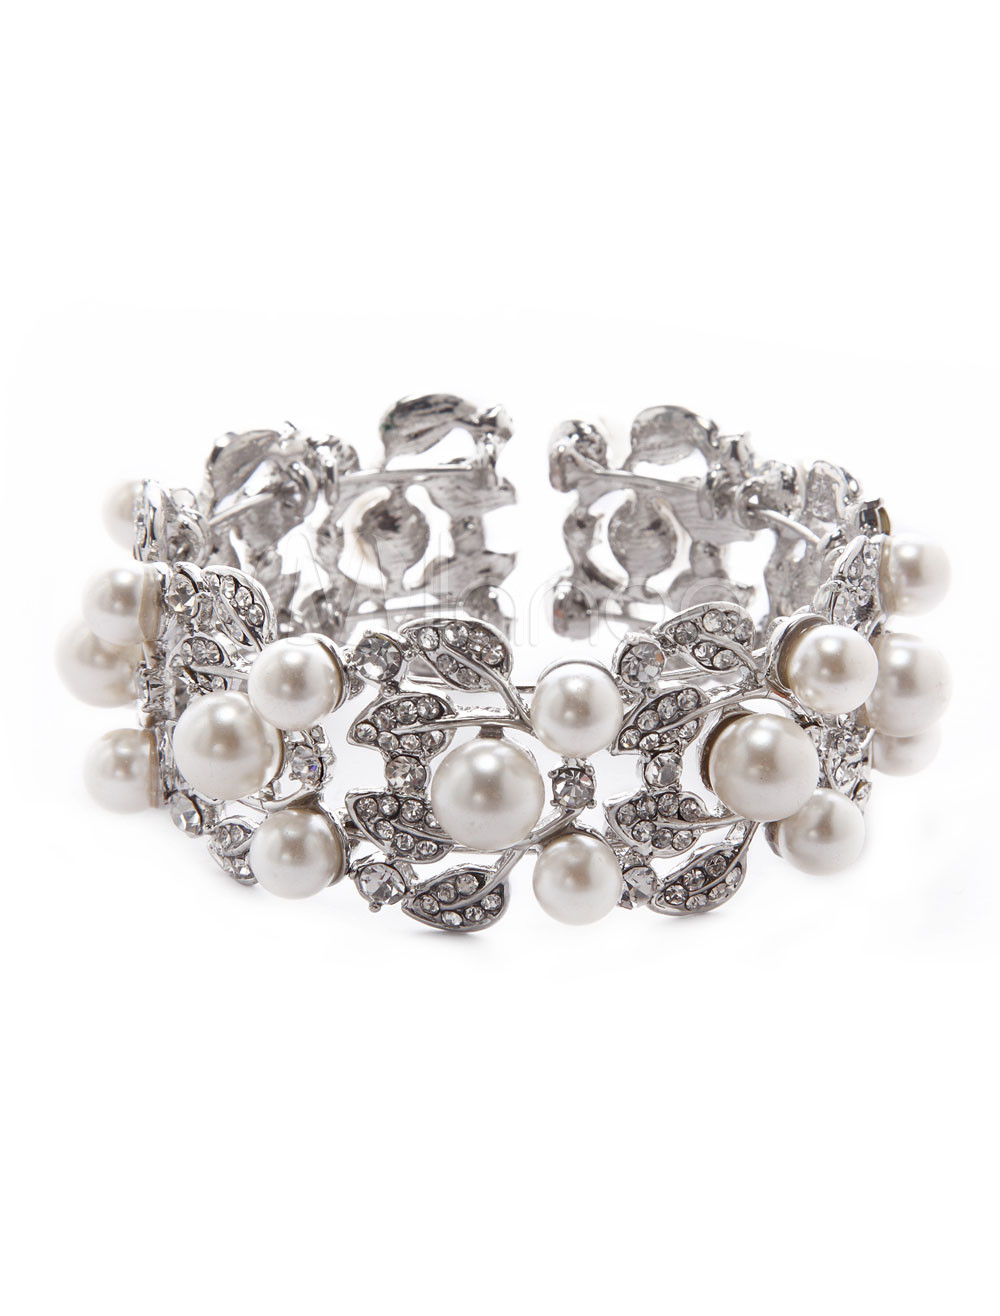 Silver Pearl Metal Floral Wedding Bracelet - Milanoo.com